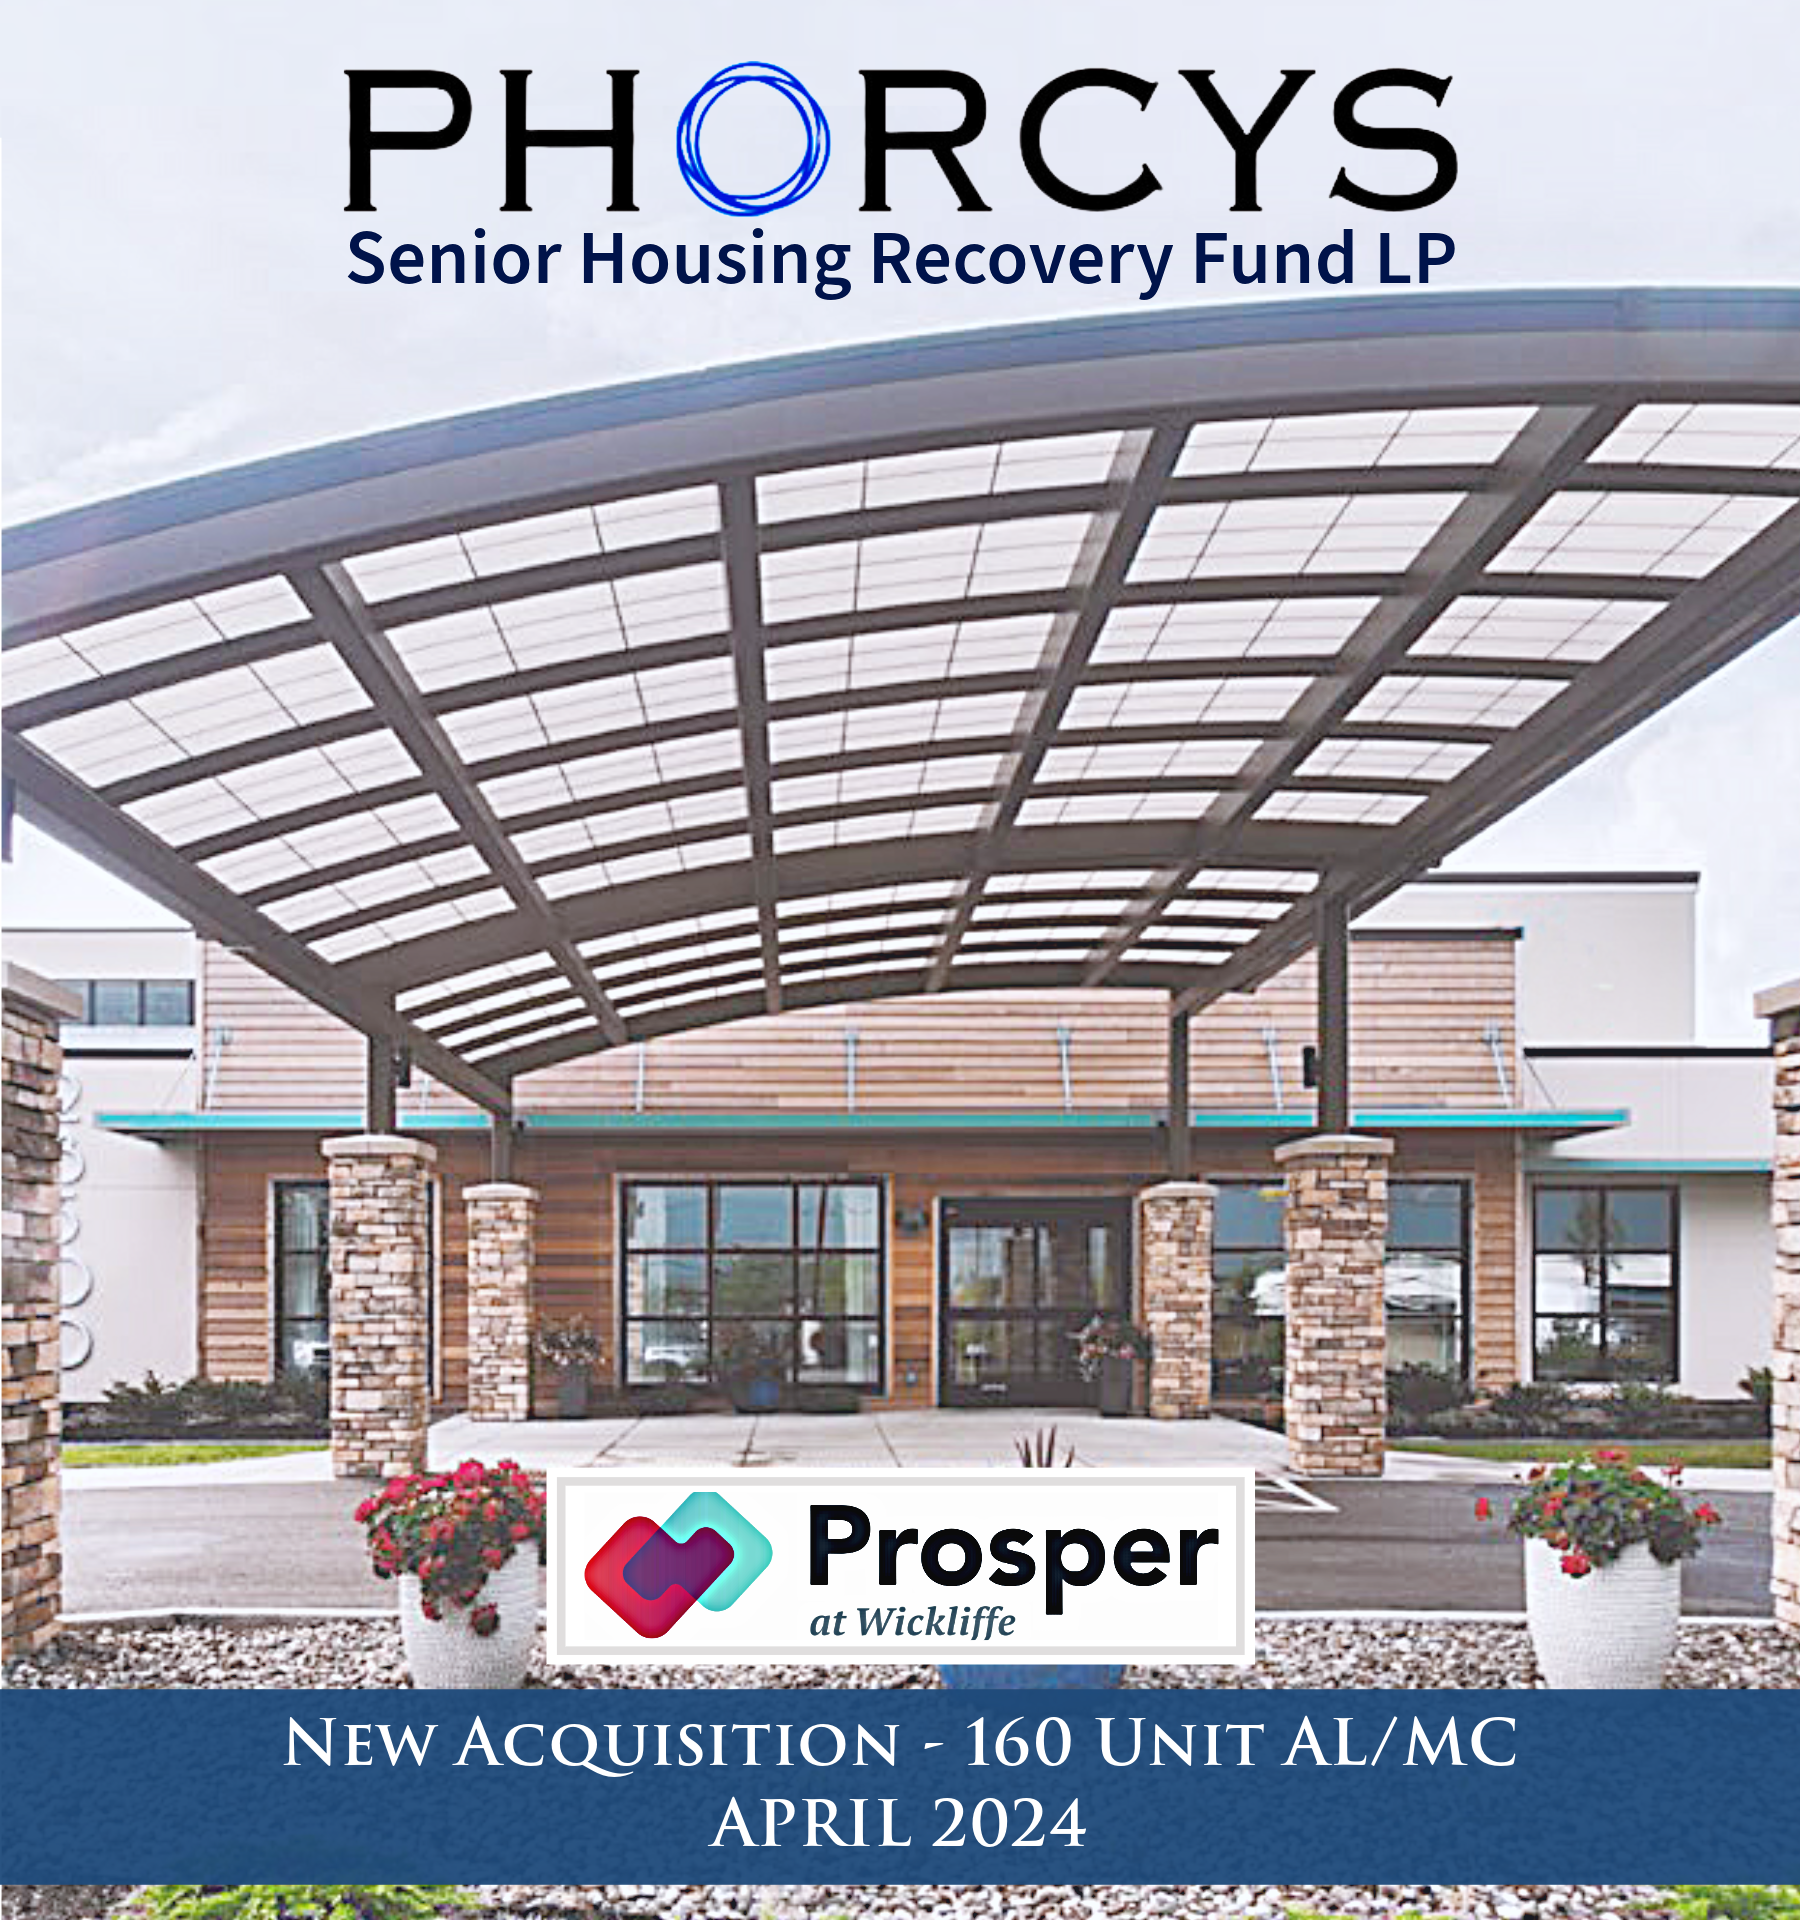 Phorcys Capital Partners, LLC Acquires Prosper at Wickliffe, Expanding Senior Living Portfolio